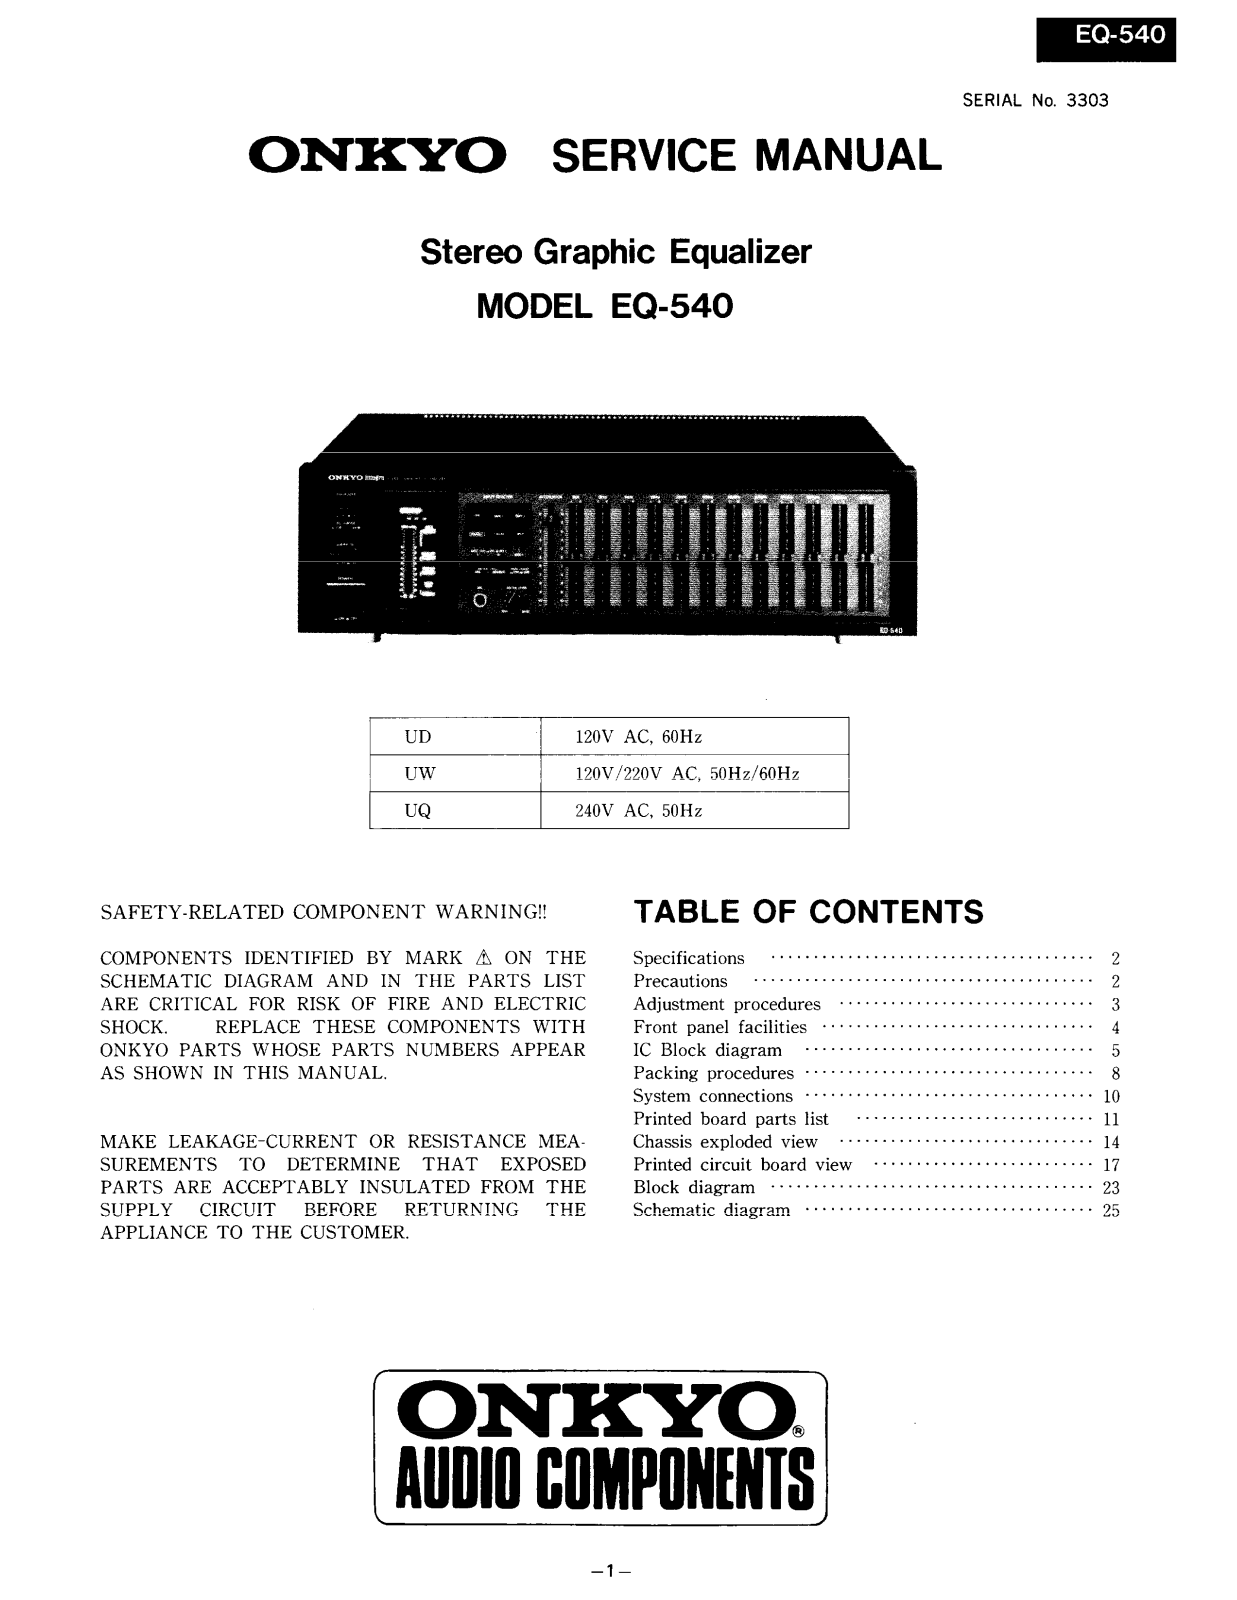 Onkyo EQ-540 Service manual